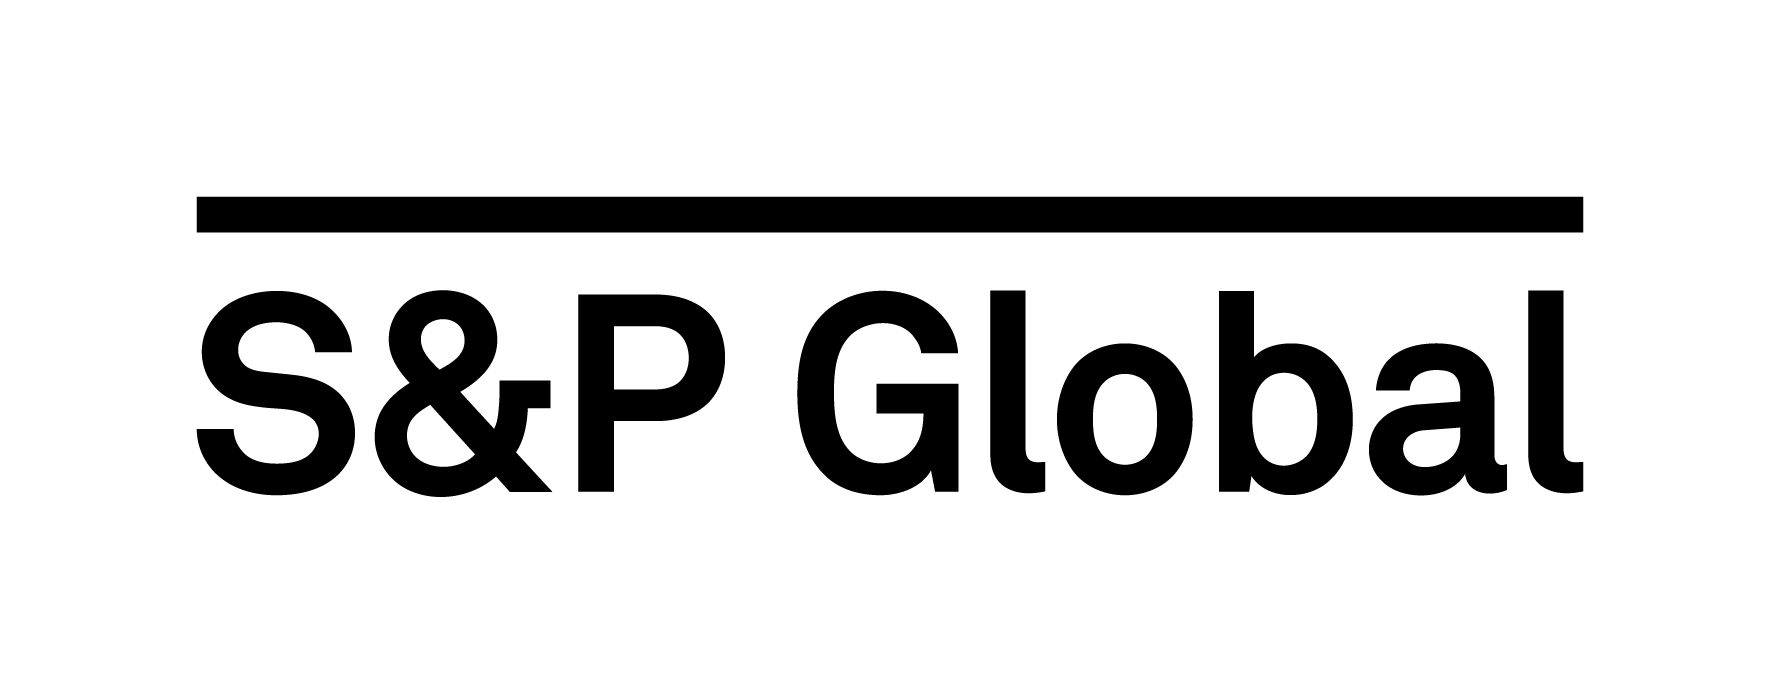 S P Gobal Logo